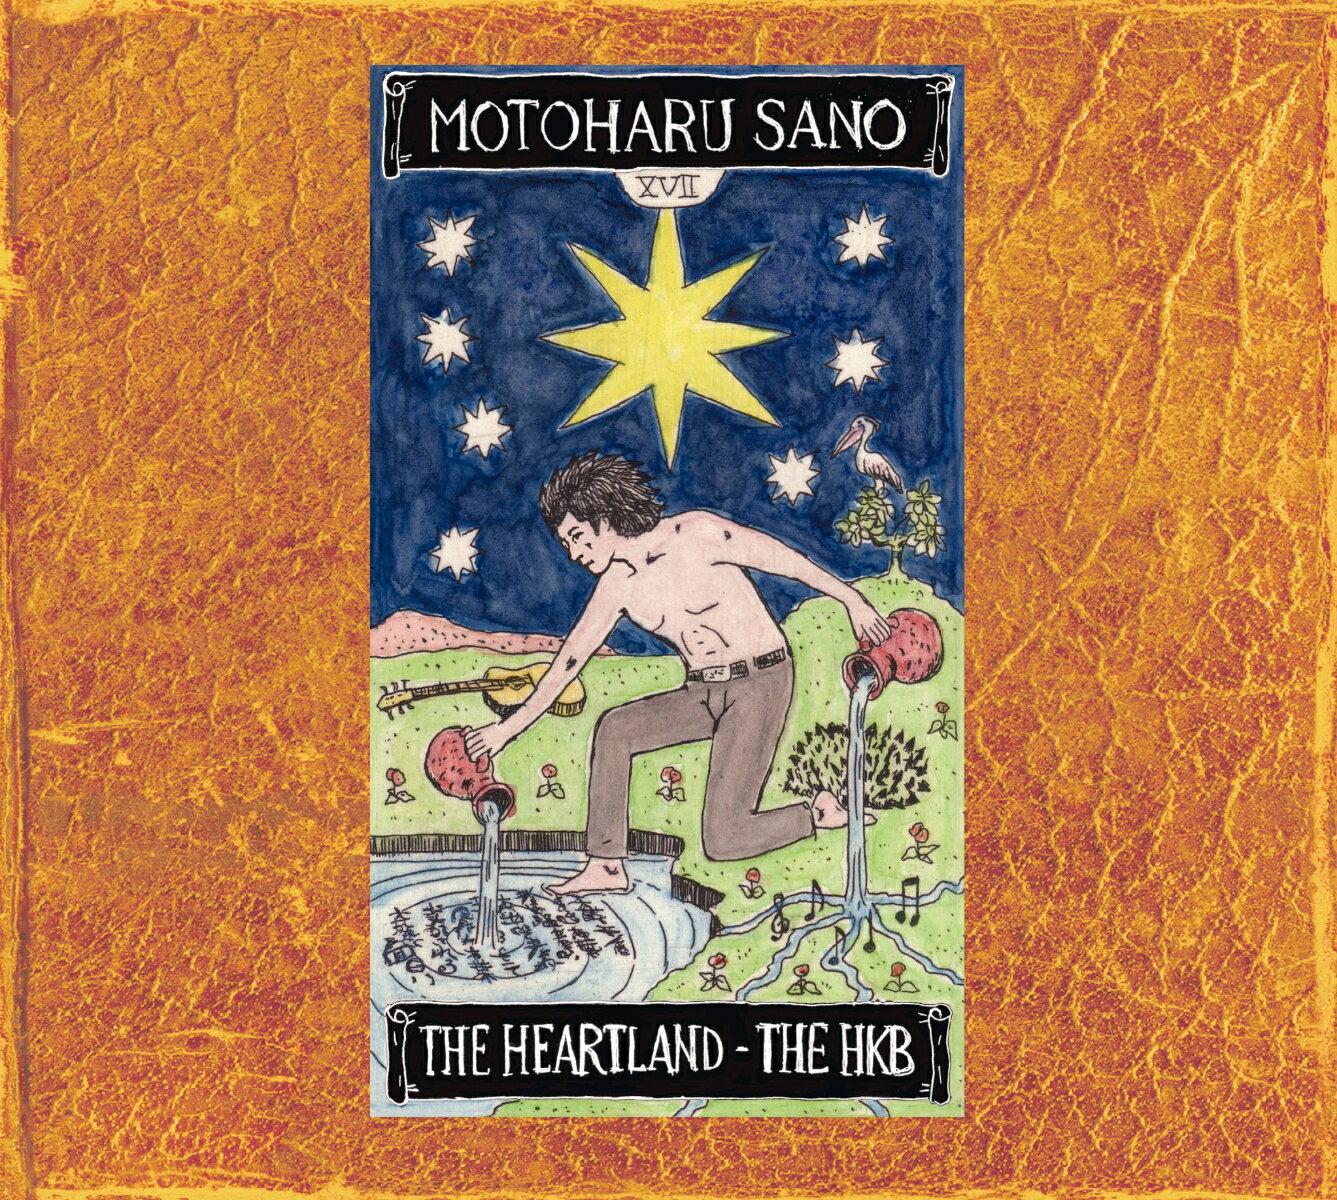 MOTOHARU SANO GREATEST SONGS COLLECTION 1980 - 2004 (初回生産限定盤 3CD+豪華ブックレット)